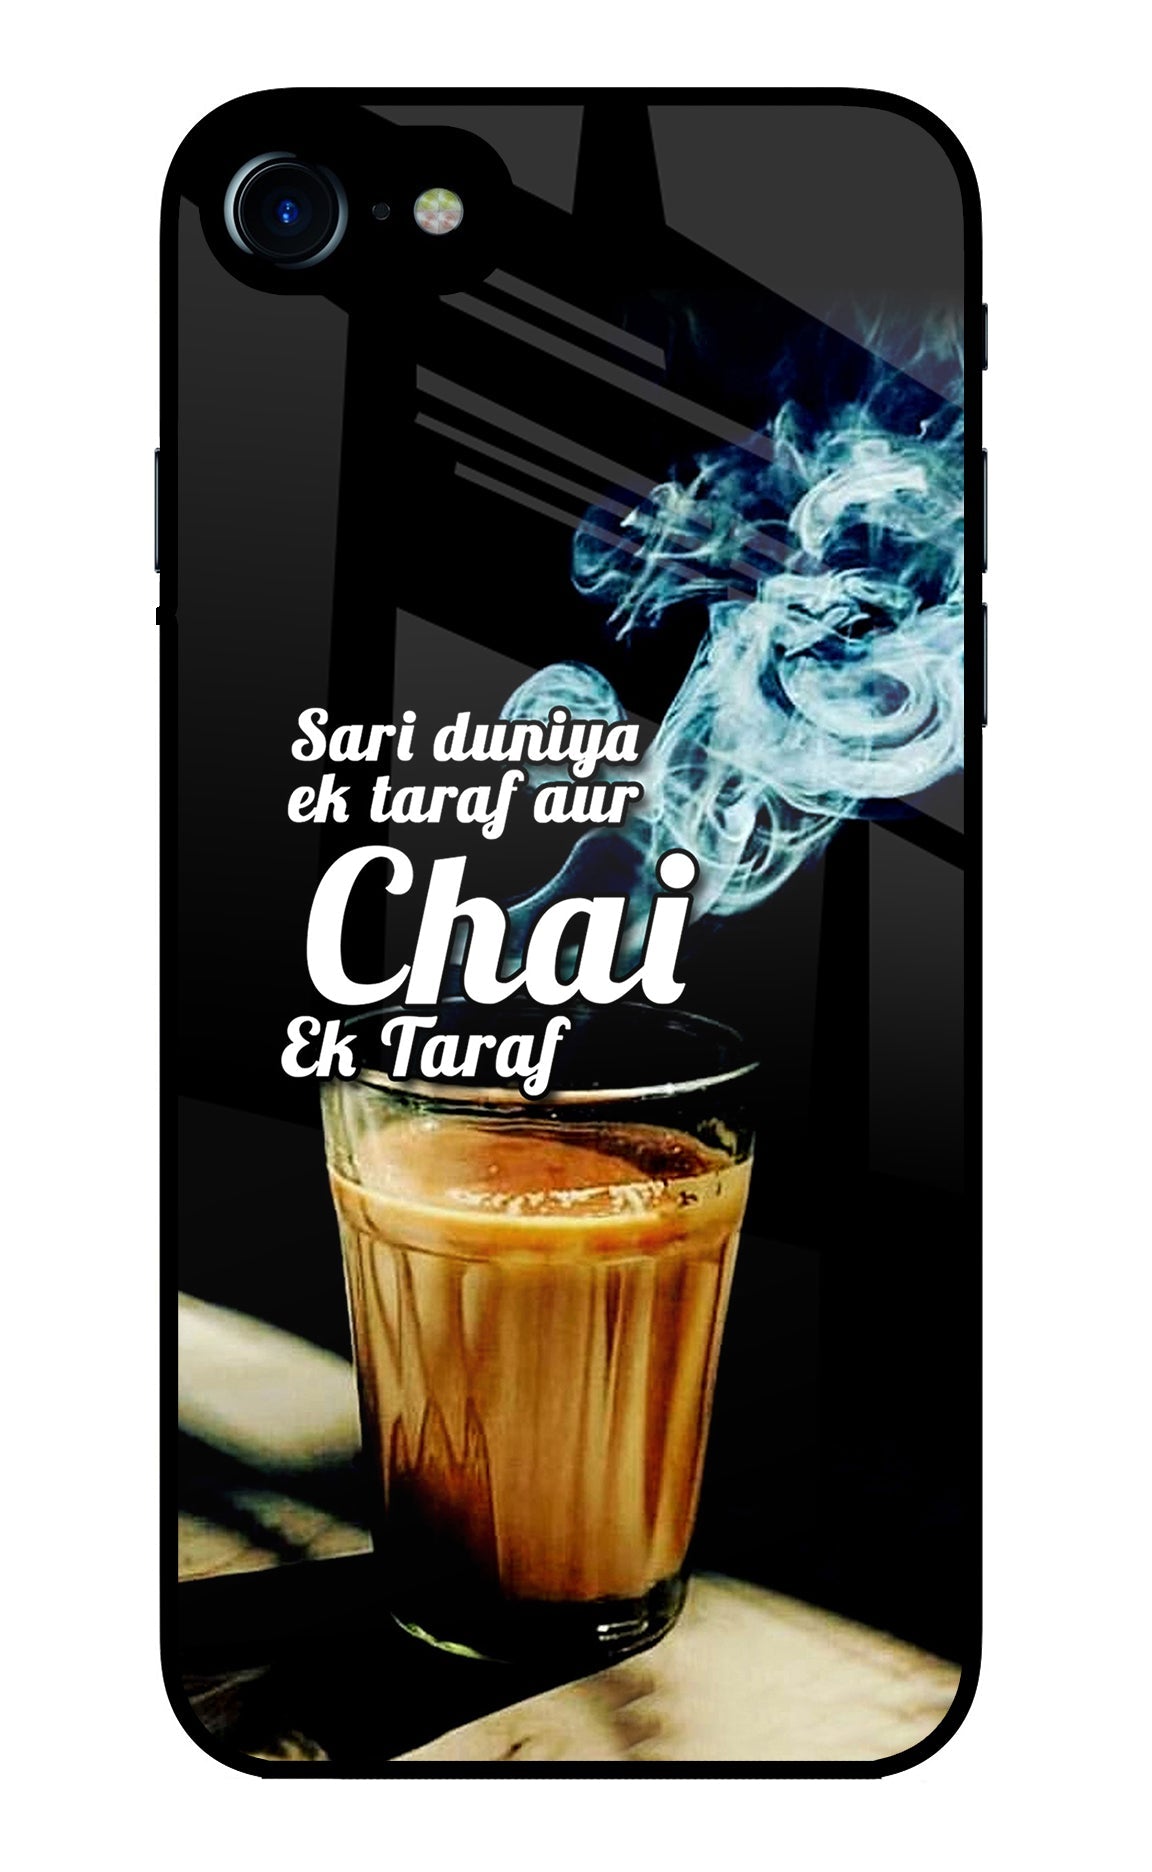 Chai Ek Taraf Quote iPhone 8/SE 2020 Glass Case